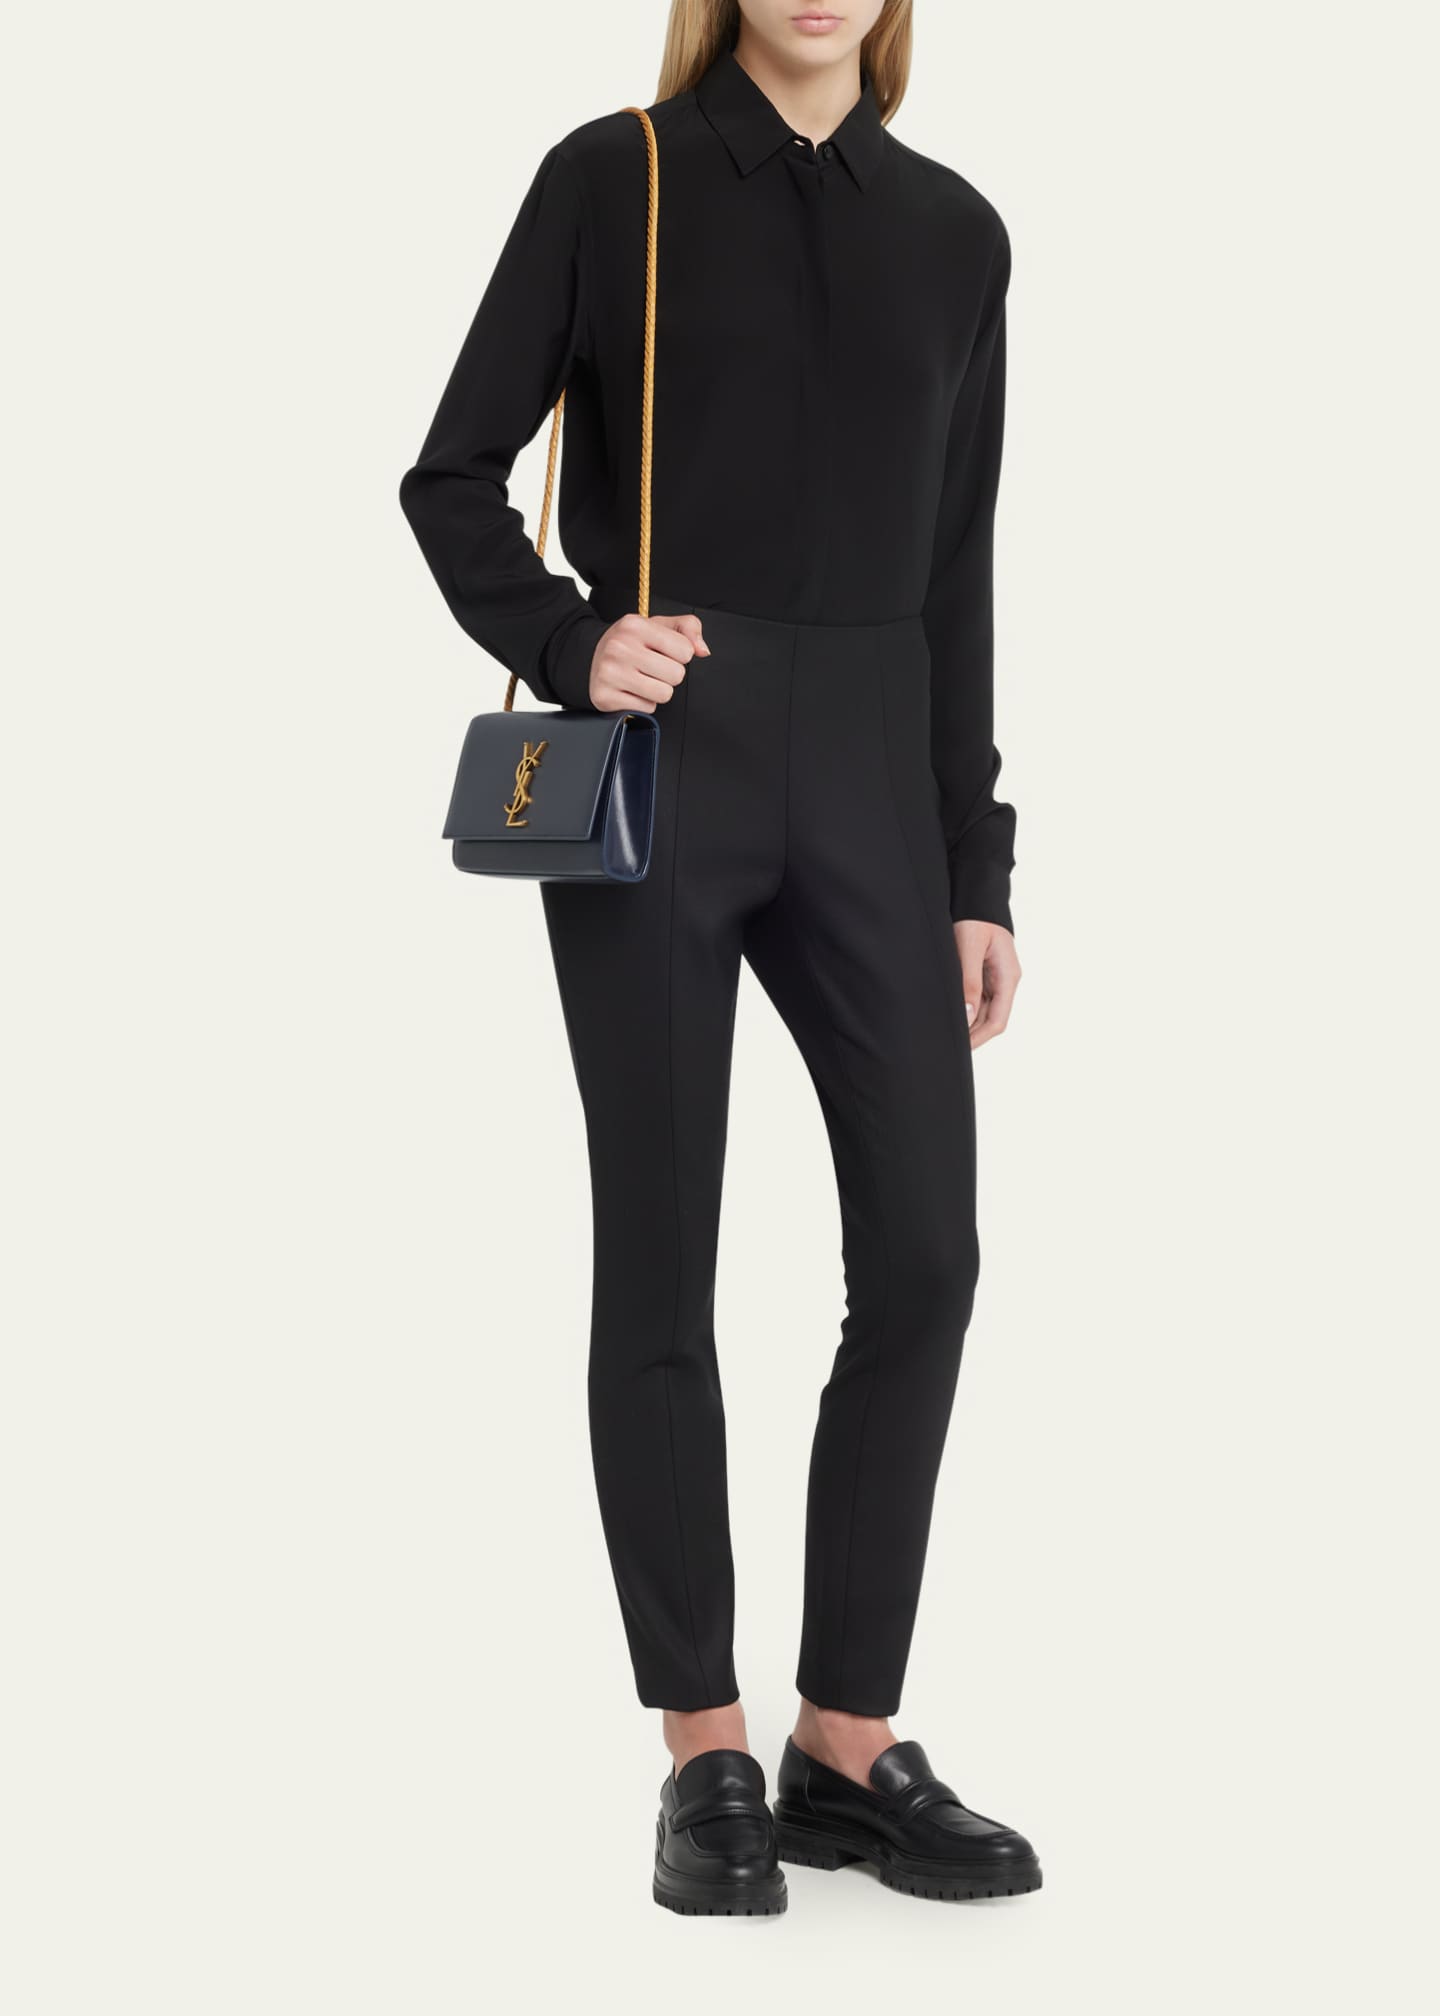 Kate YSL Flap Leather Chain Shoulder Bag